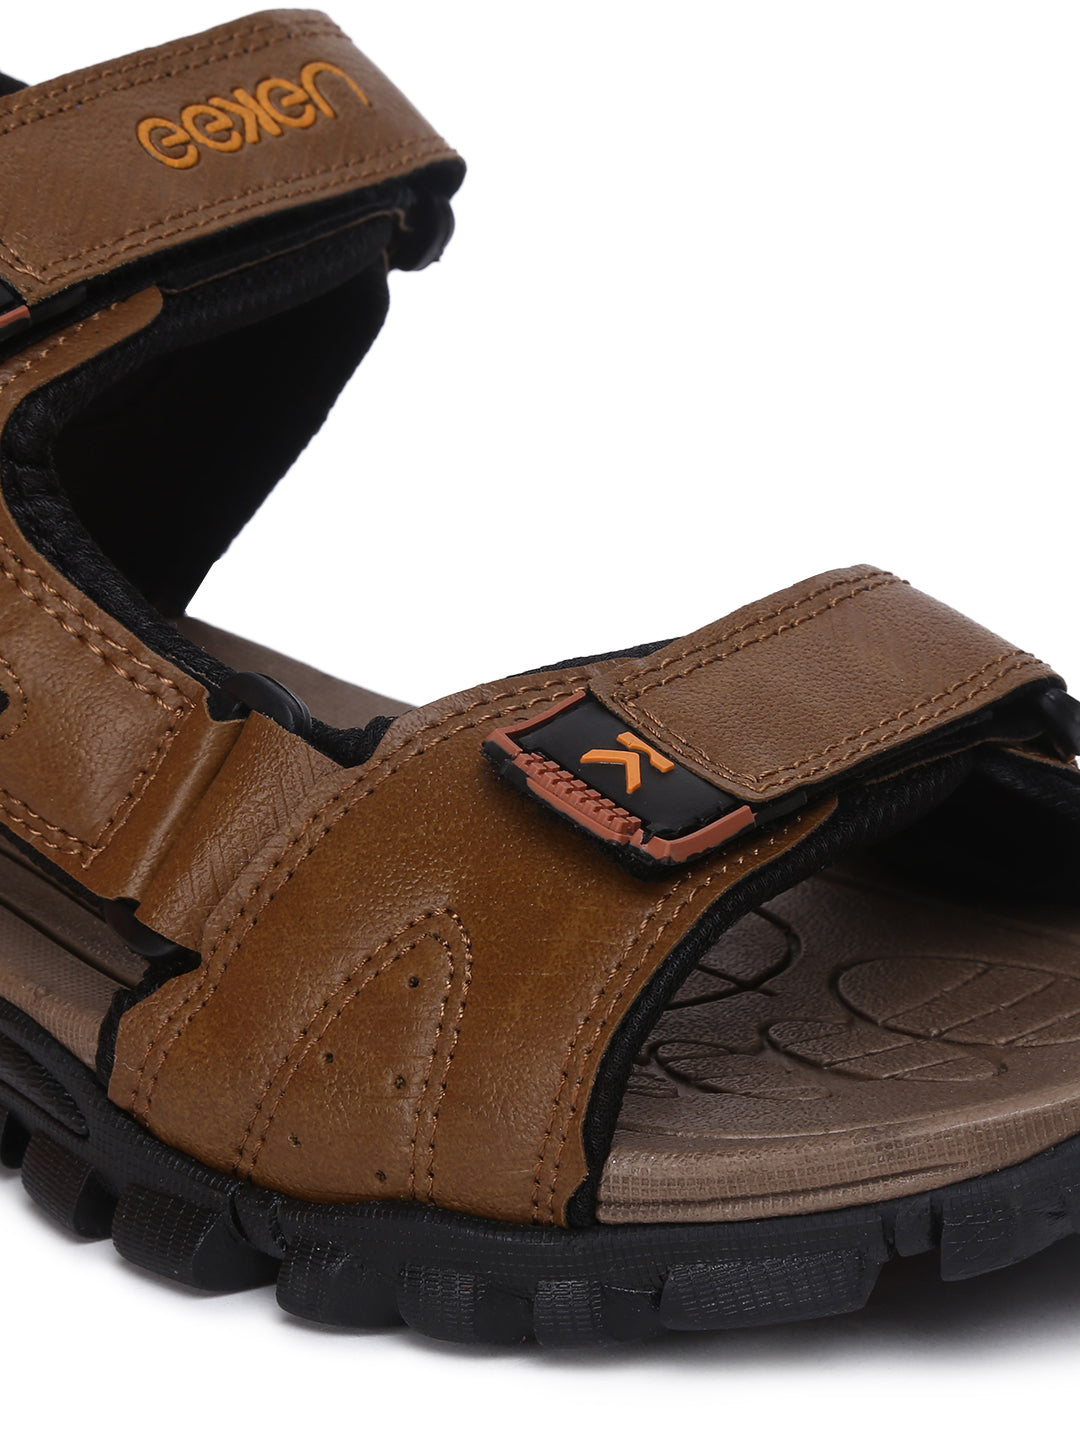 Eeken ESDG3033 Tan Stylish Lightweight Dailywear Sports Sandals For Men